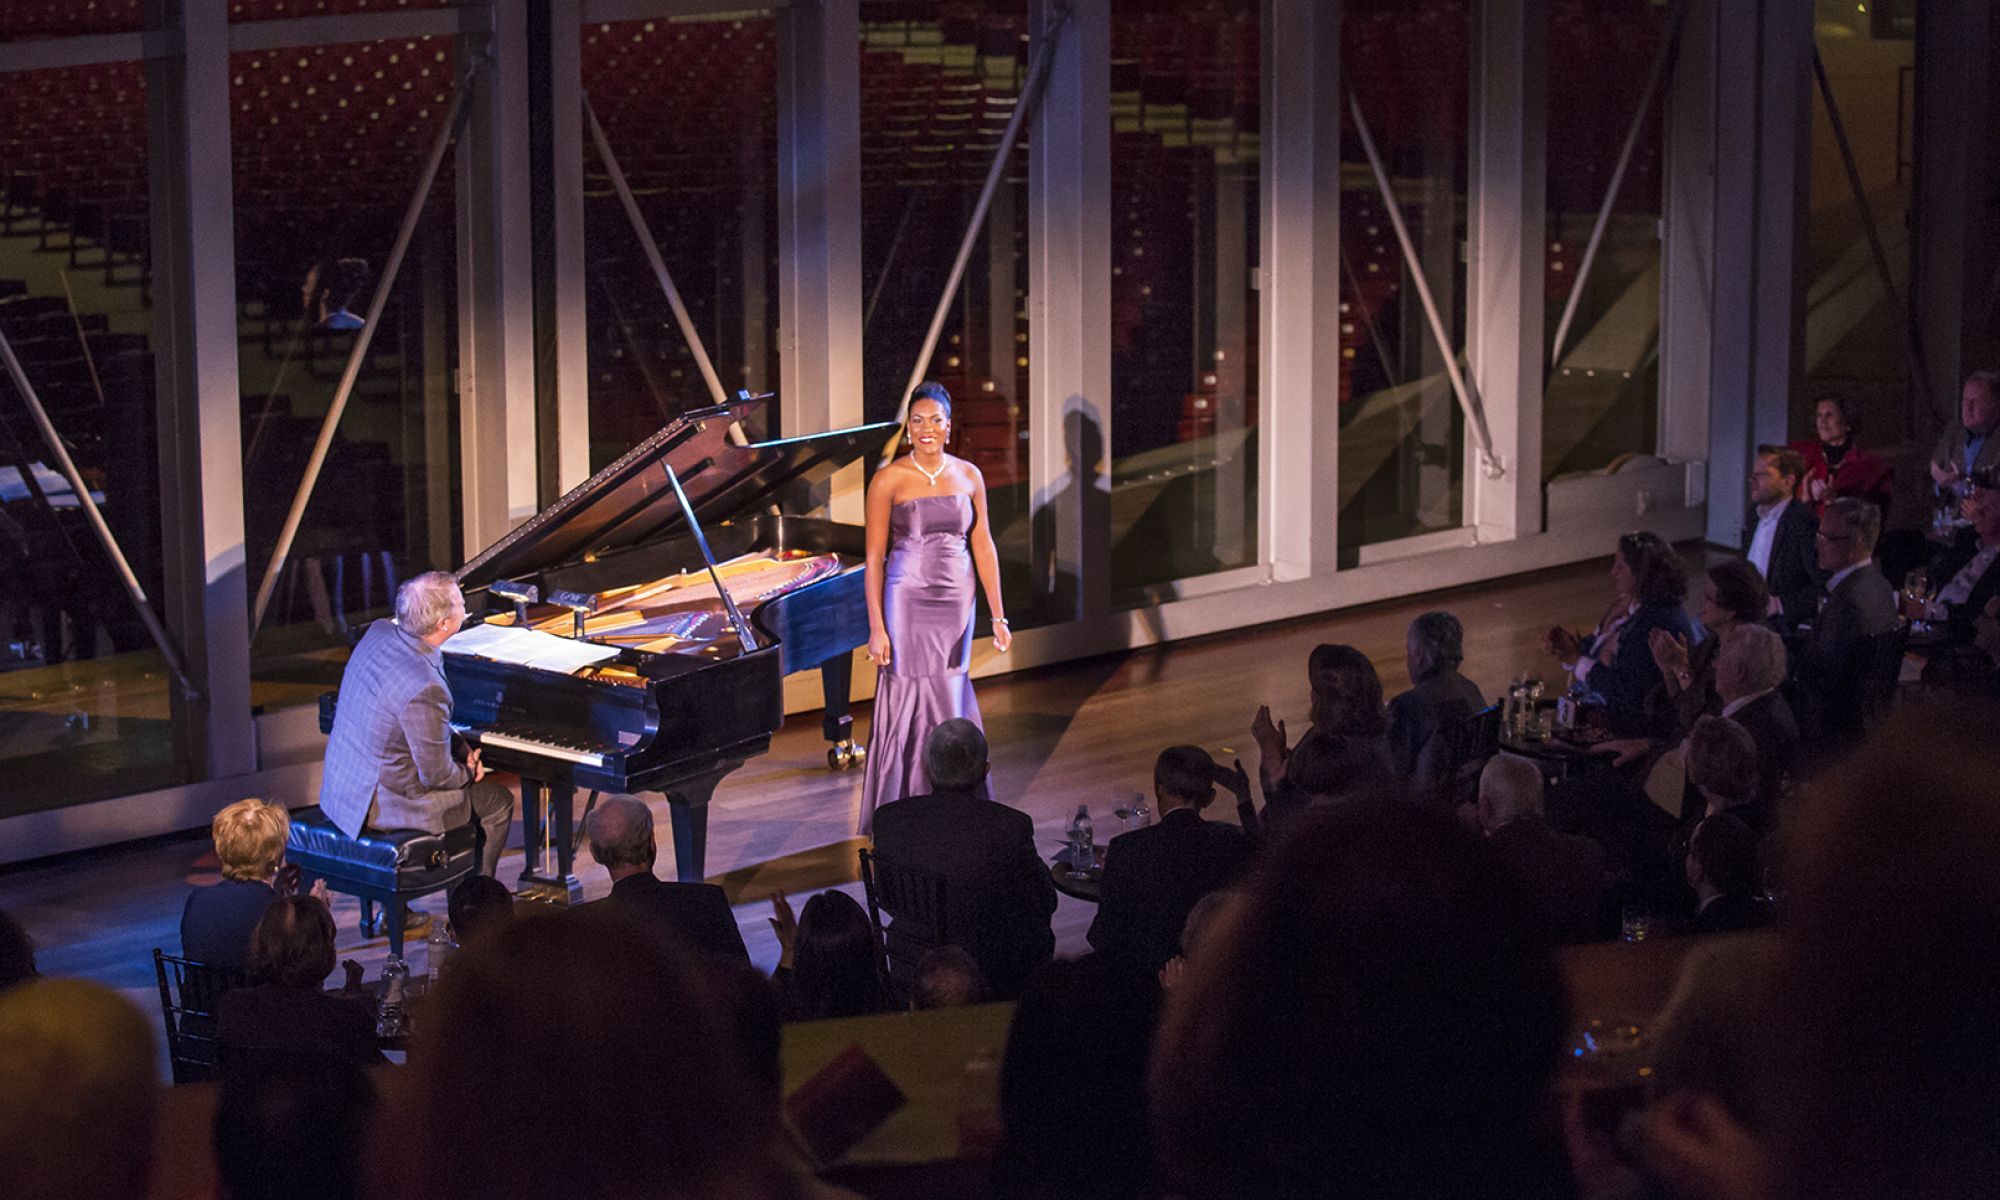 J'Nai Bridges in a purple dress smiling next to Craig Terry sitting at piano